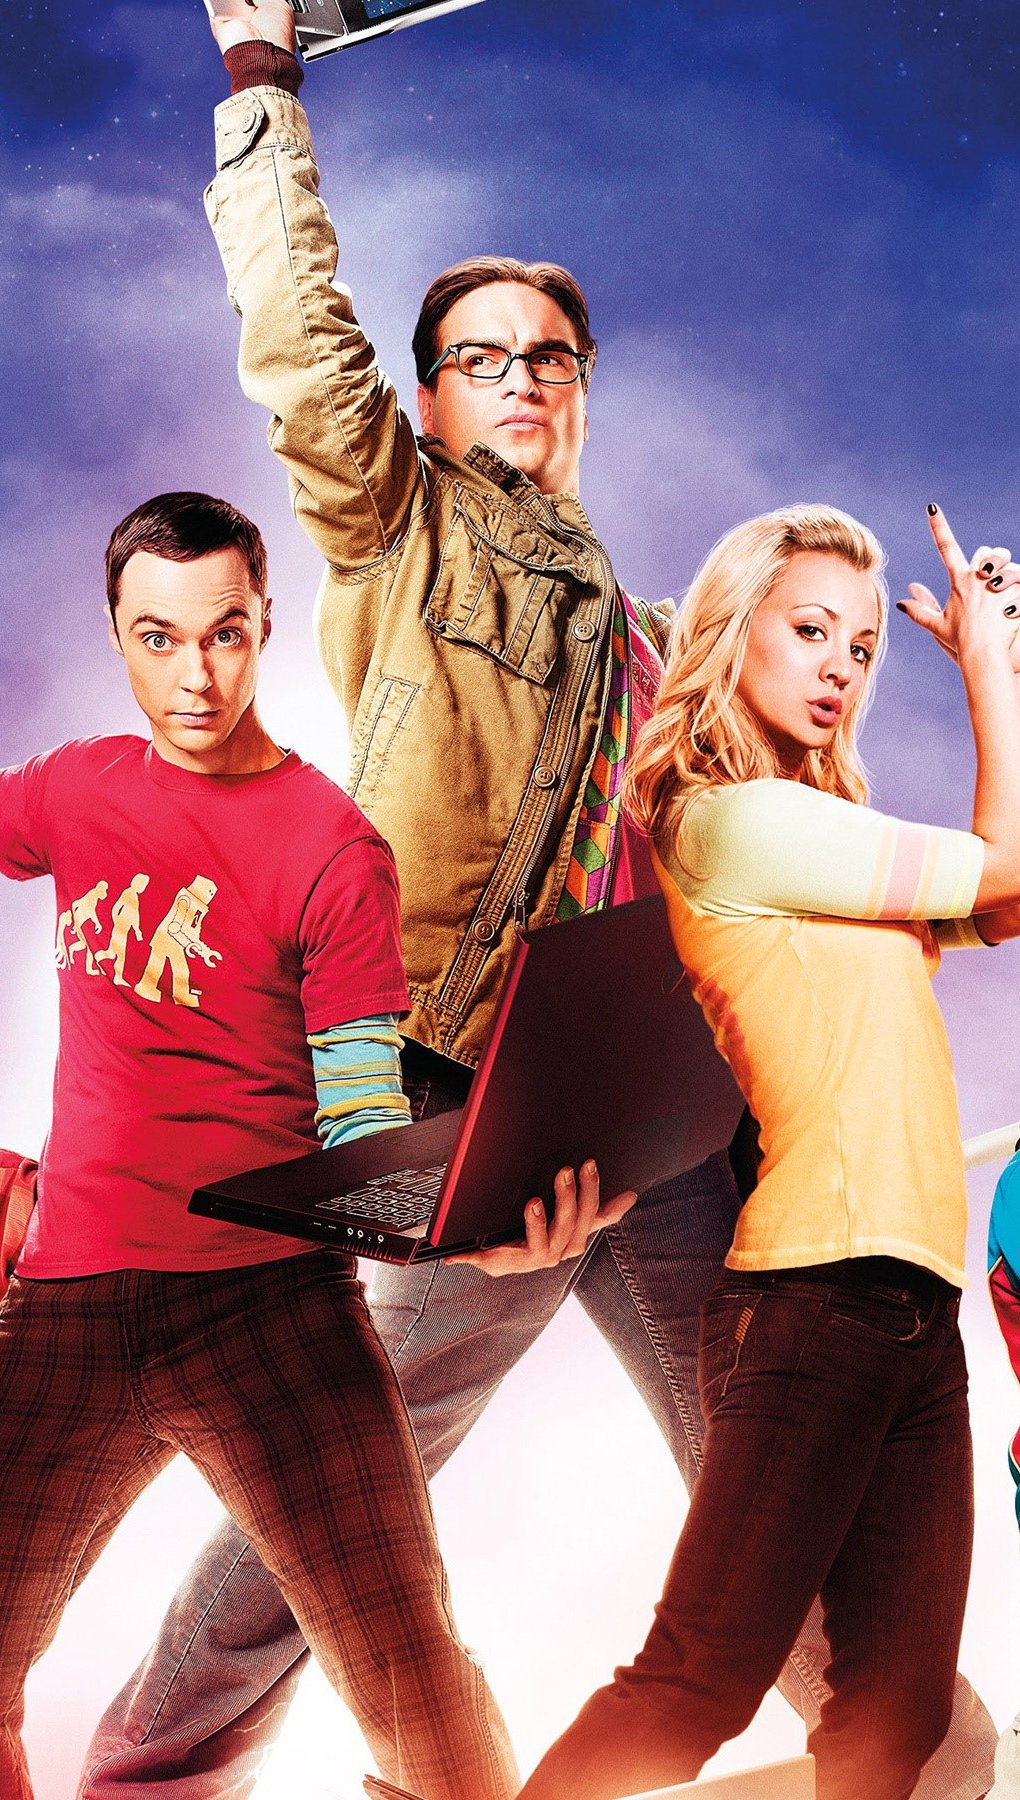 Big Bang Theory Wallpaper on Behance